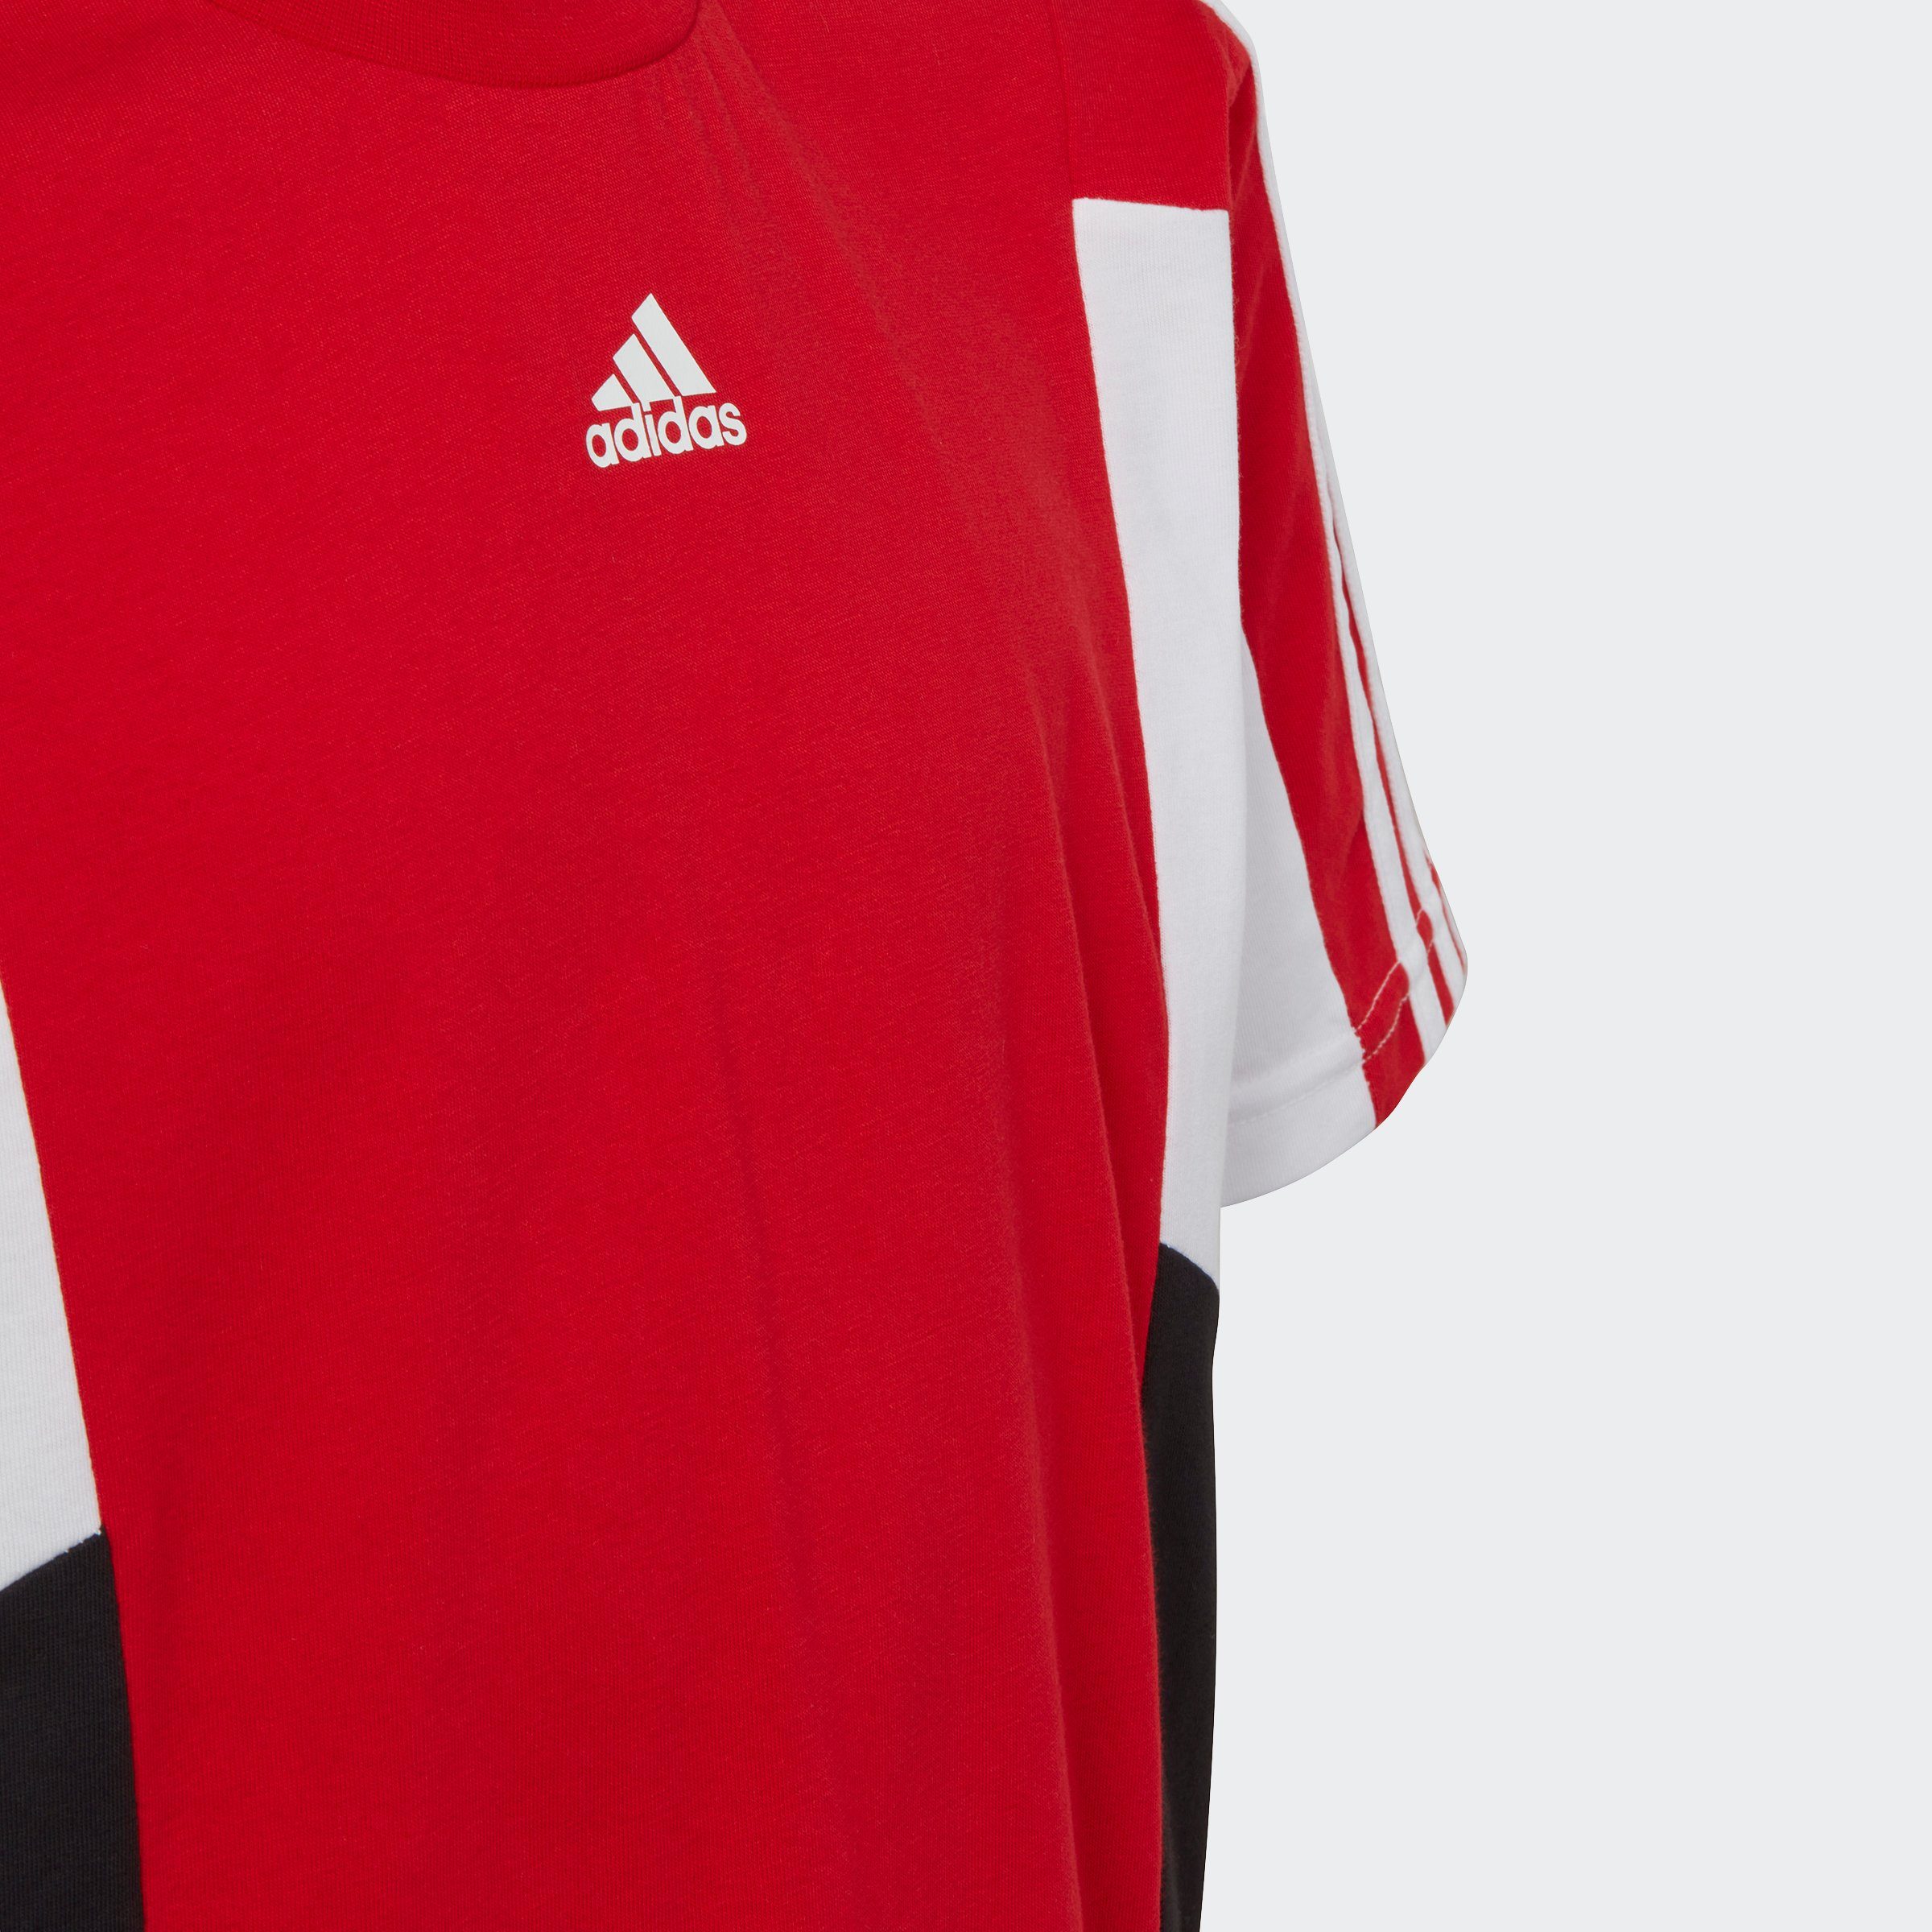 COLORBLOCK / FIT Better Scarlet REGULAR Sportswear Black adidas / White 3-STREIFEN T-Shirt